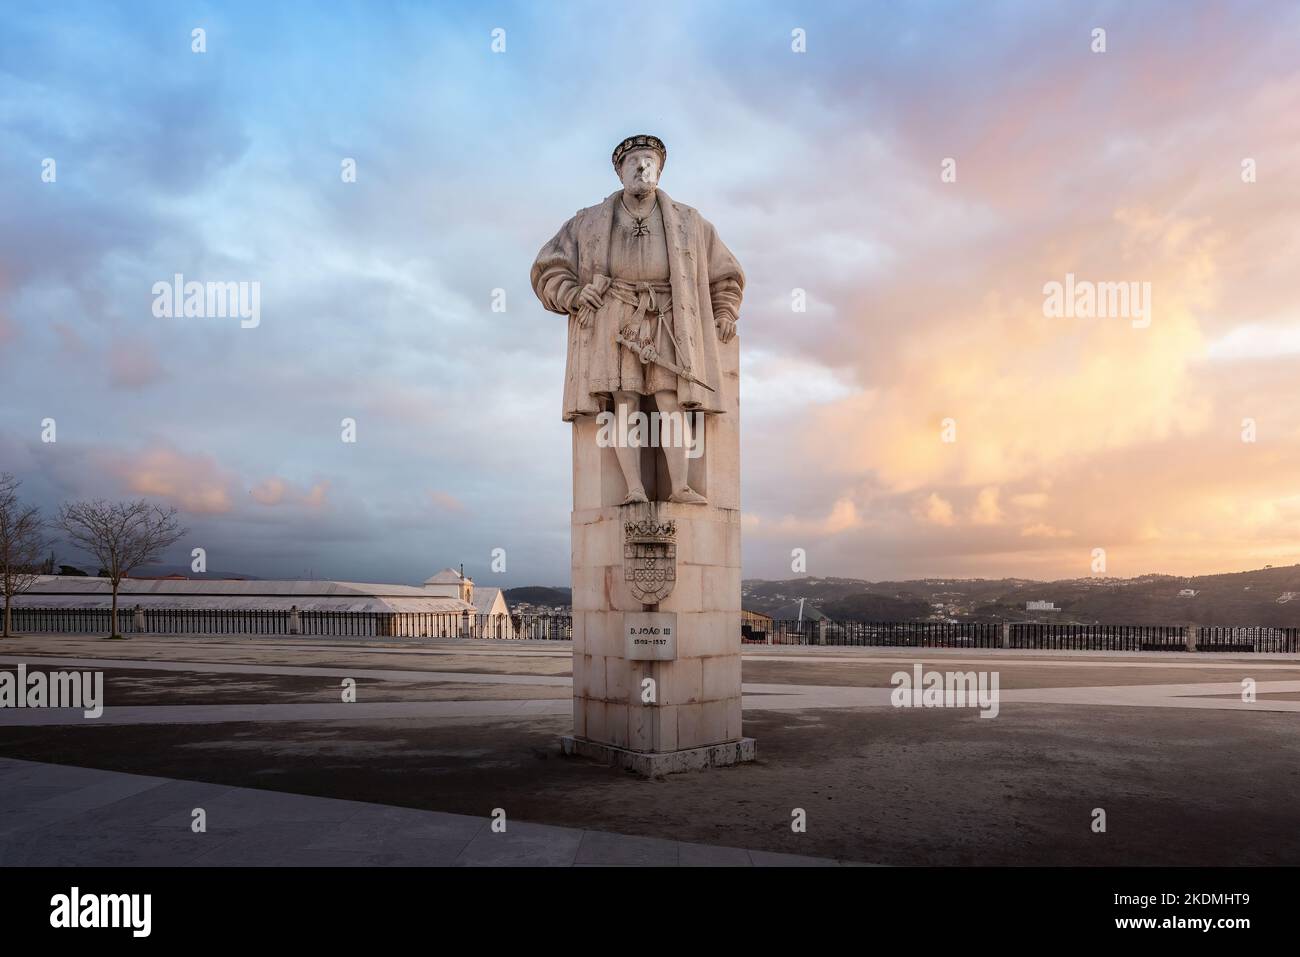 Estatua del Rey Joao III en el patio de la Universidad de Coimbra - Coimbra, Portugal Foto de stock